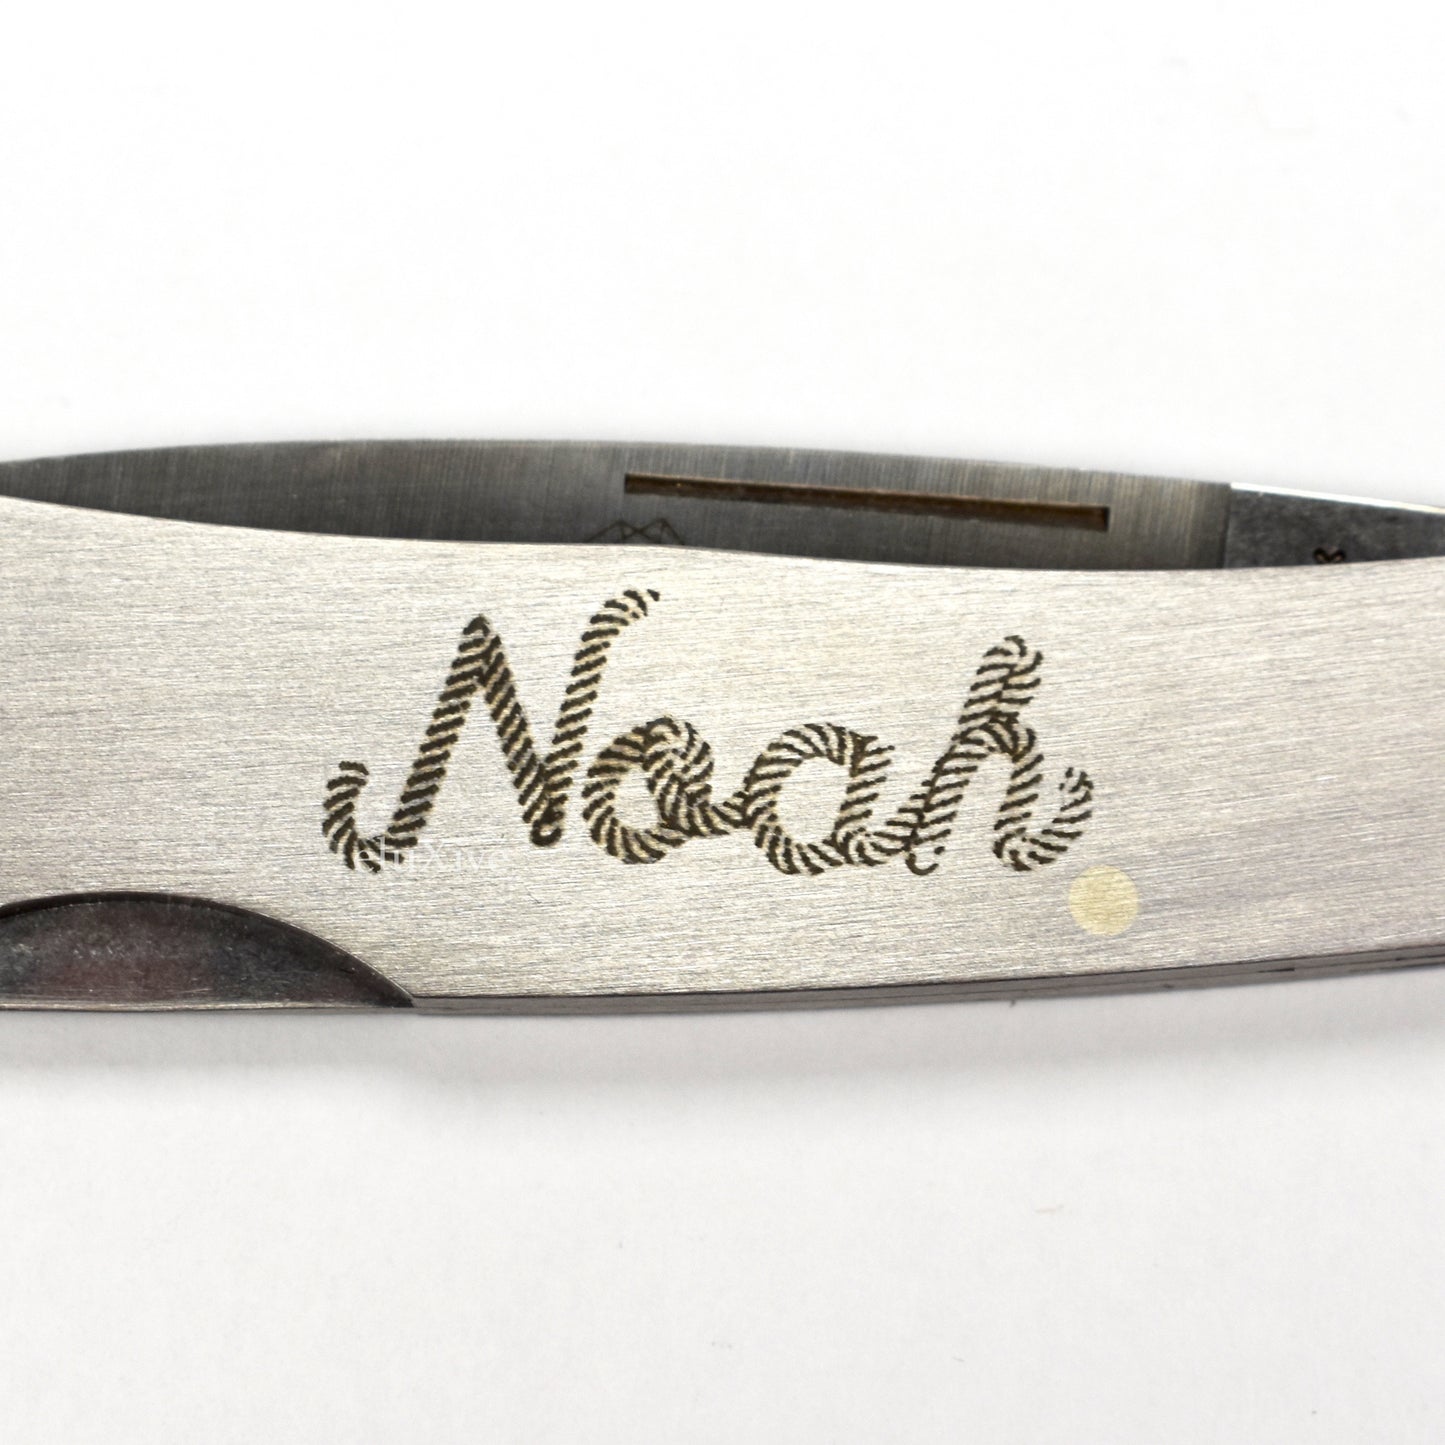 Noah - Rope Logo Pocket Knife